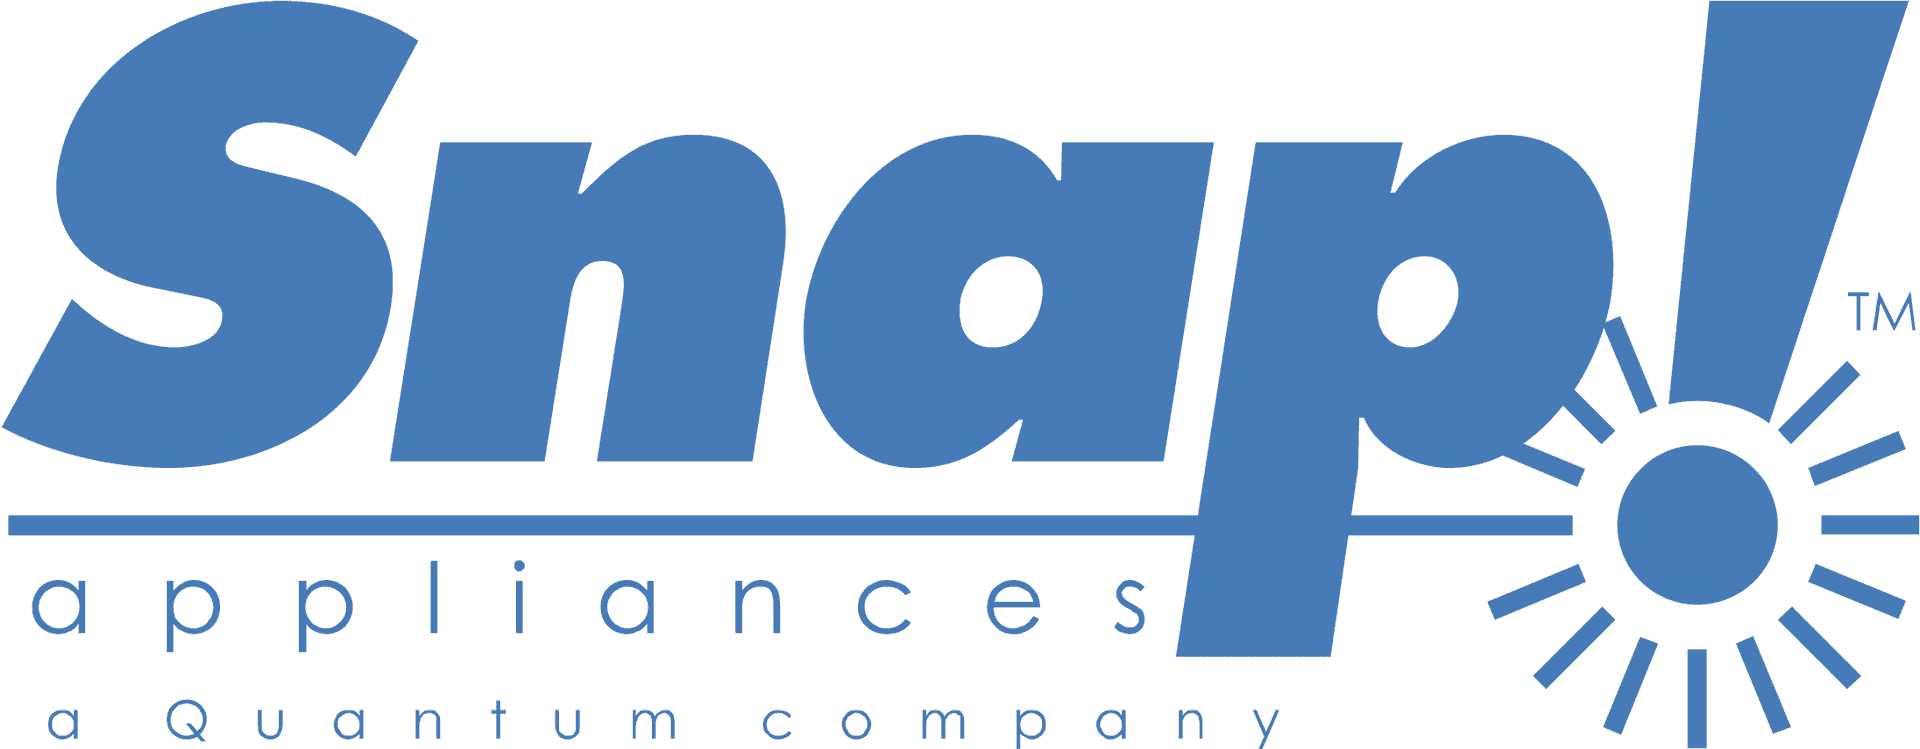 Snap Appliances Logo PNG